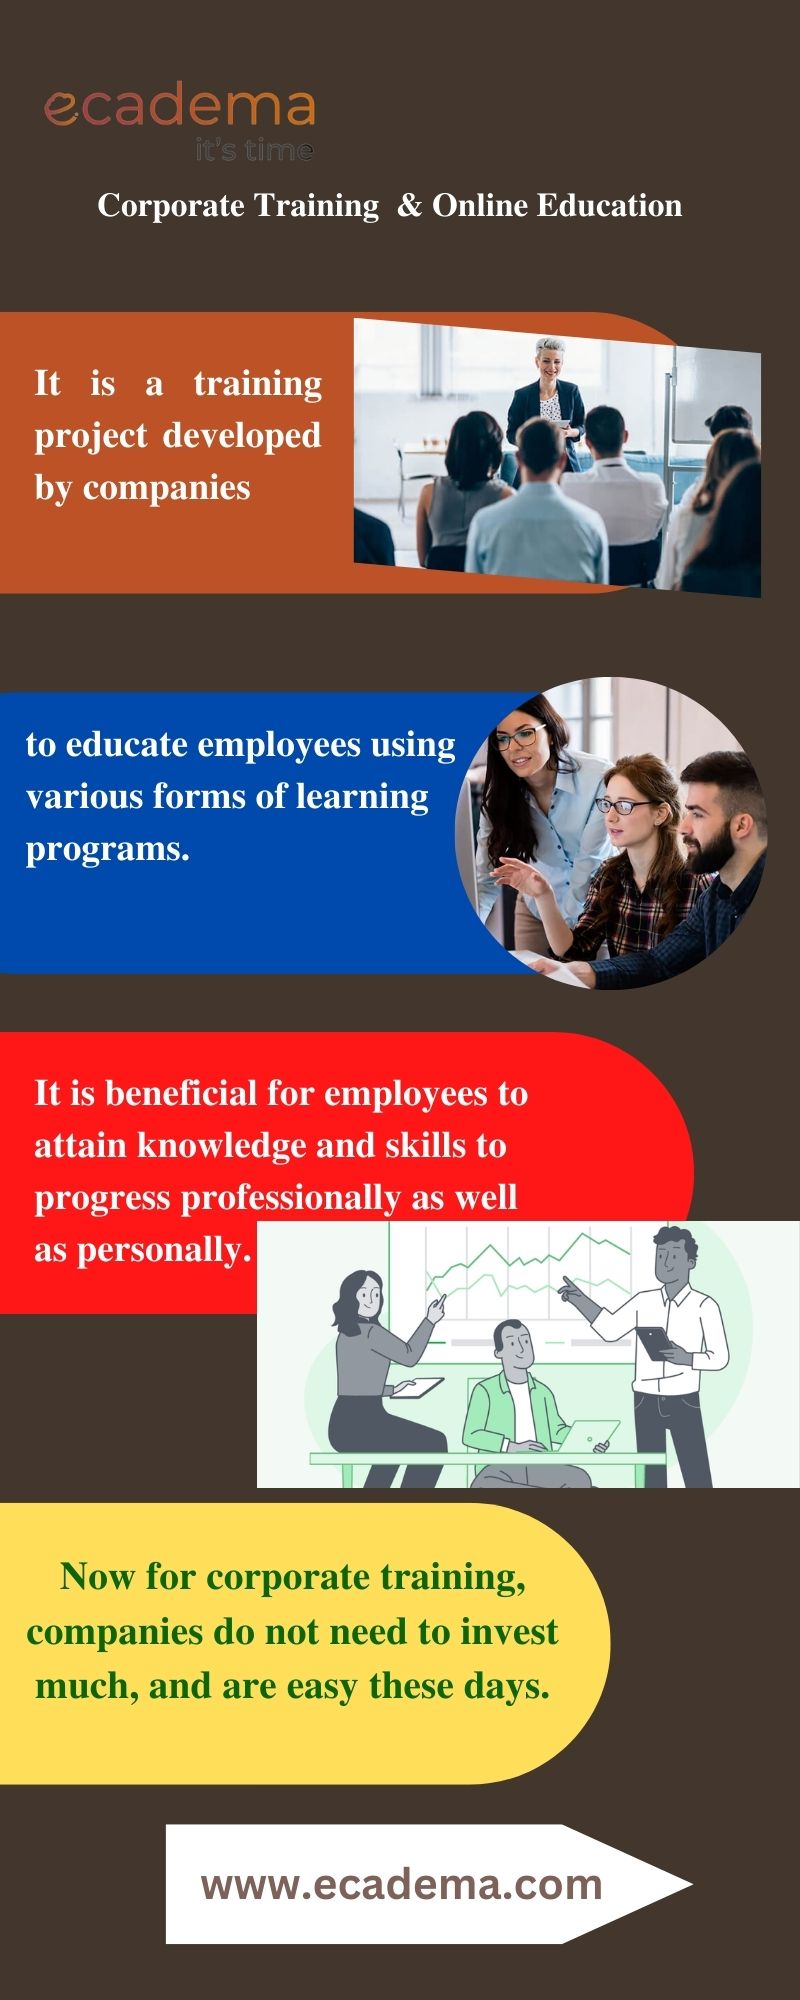 Corporate Training & Online Education.jpg  by ecadema